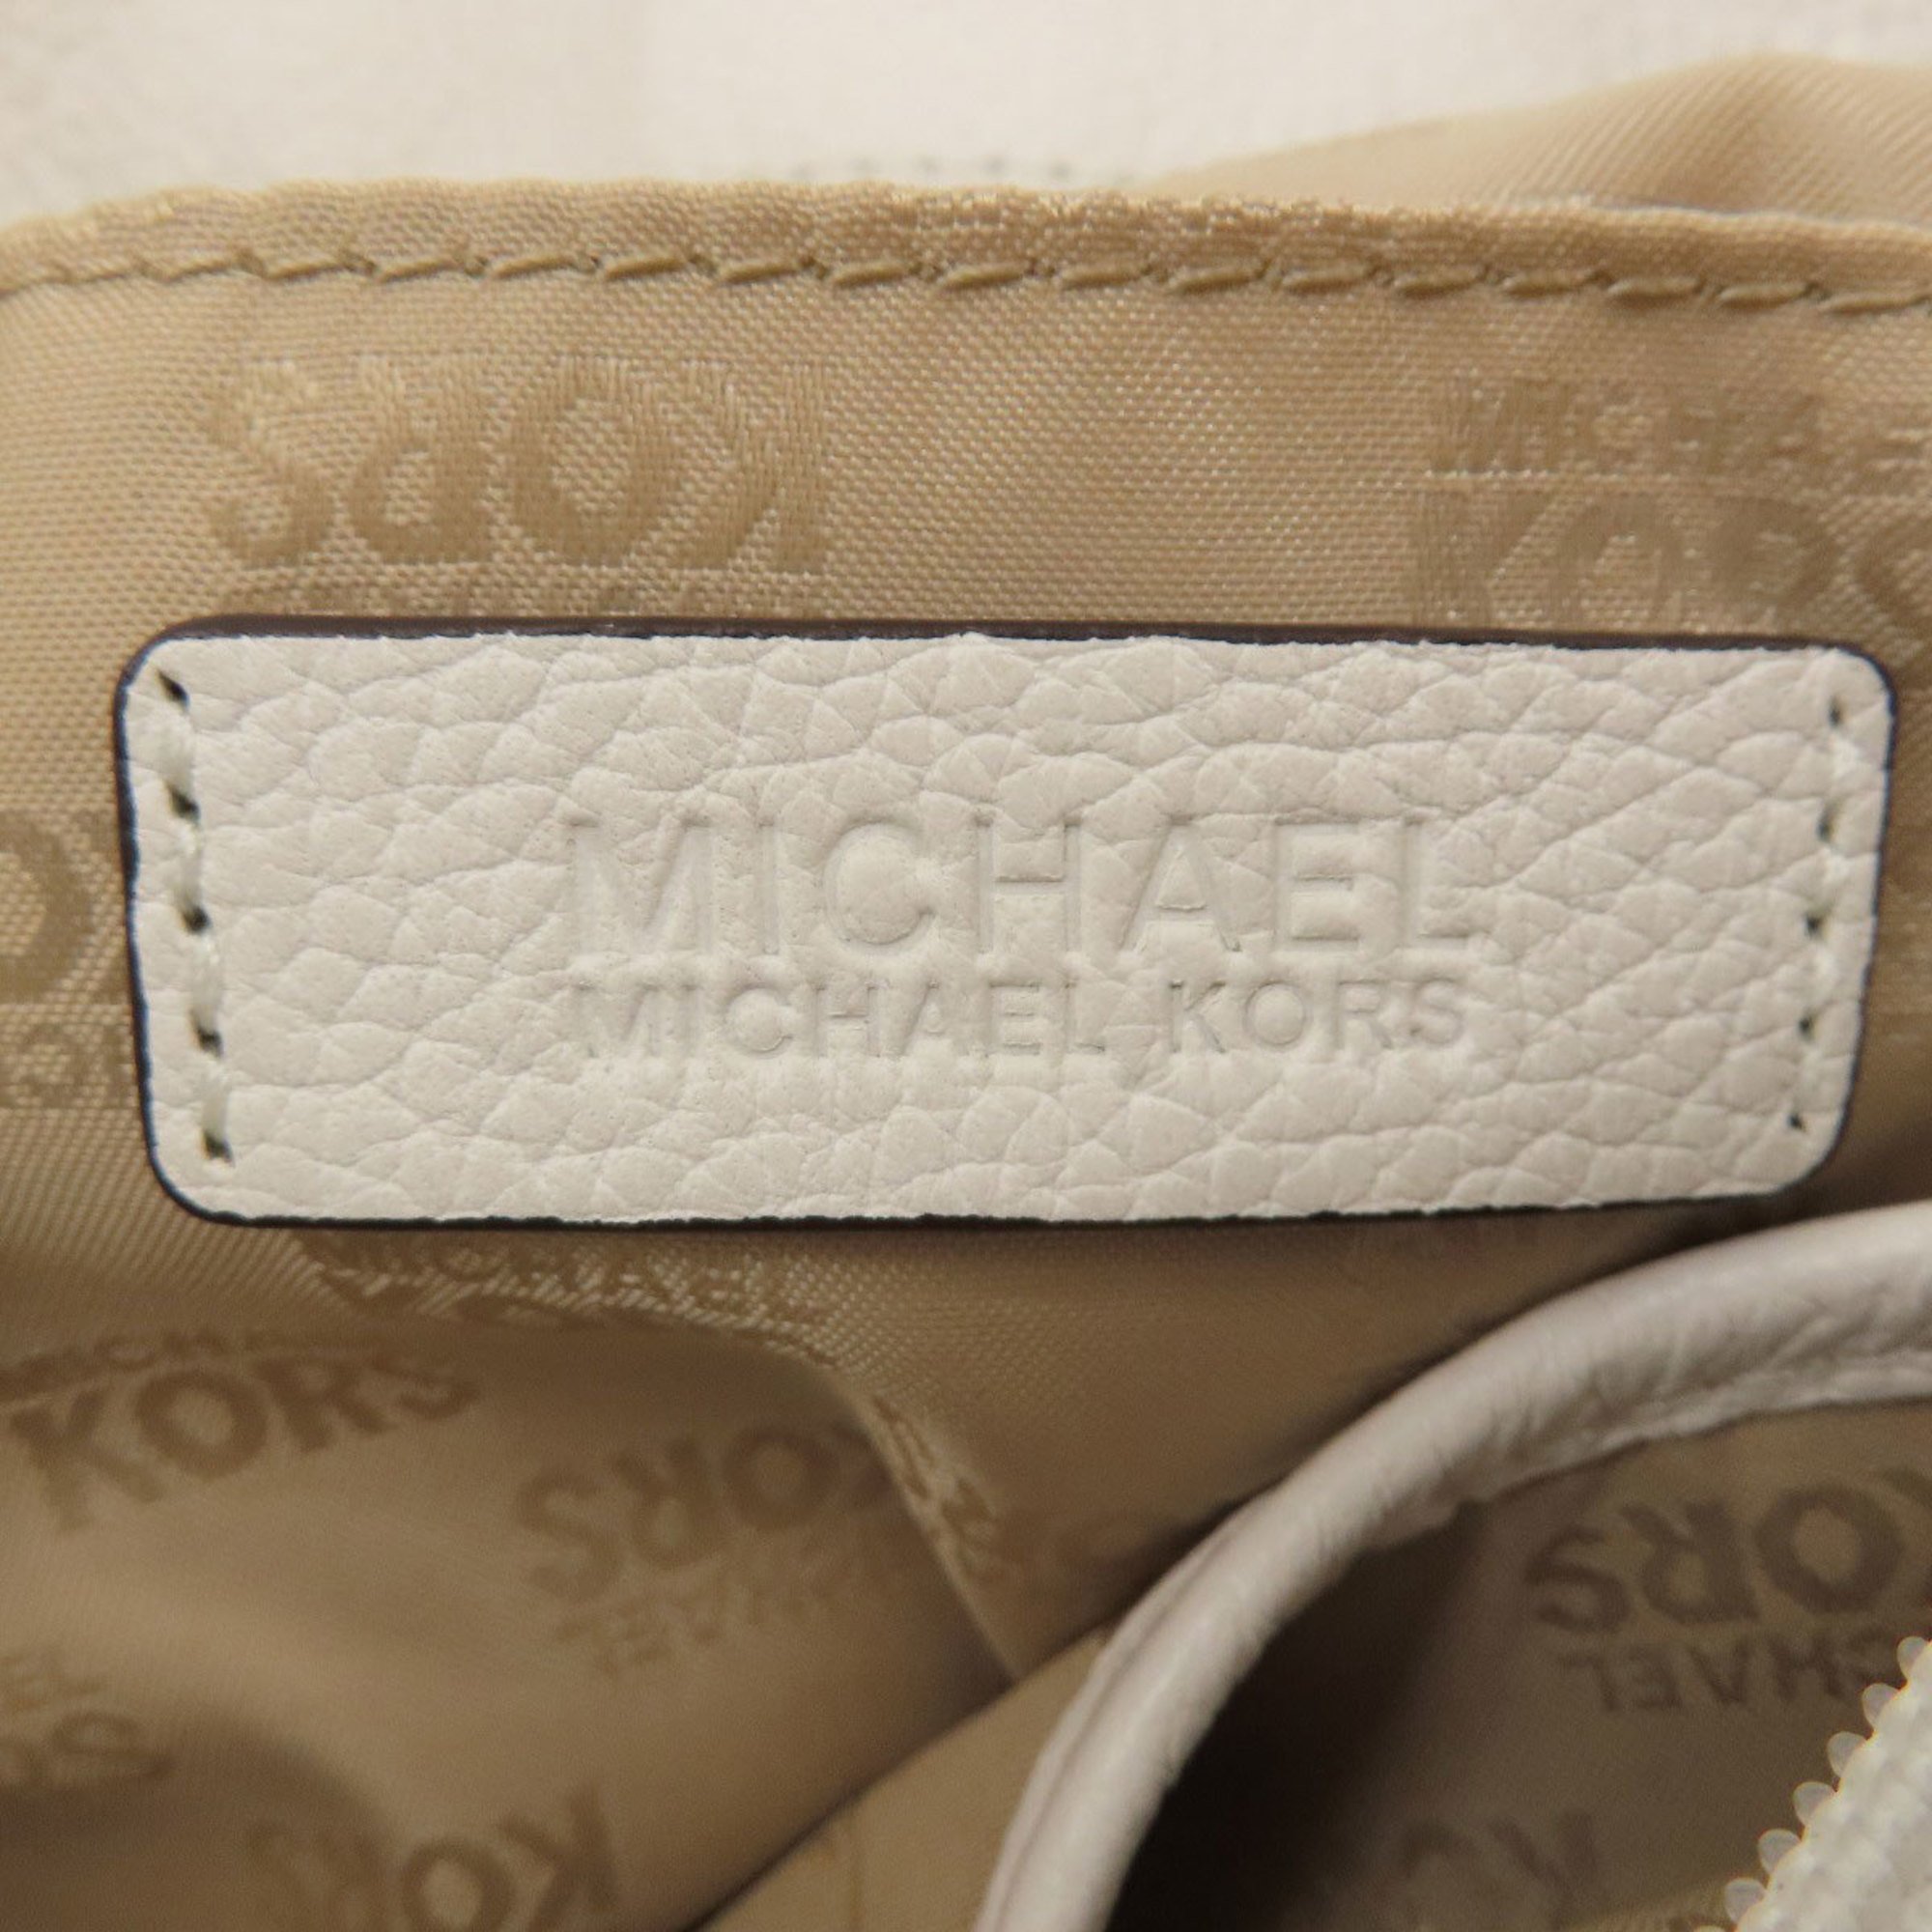 Michael Kors Chain Tote Bag Leather Women's